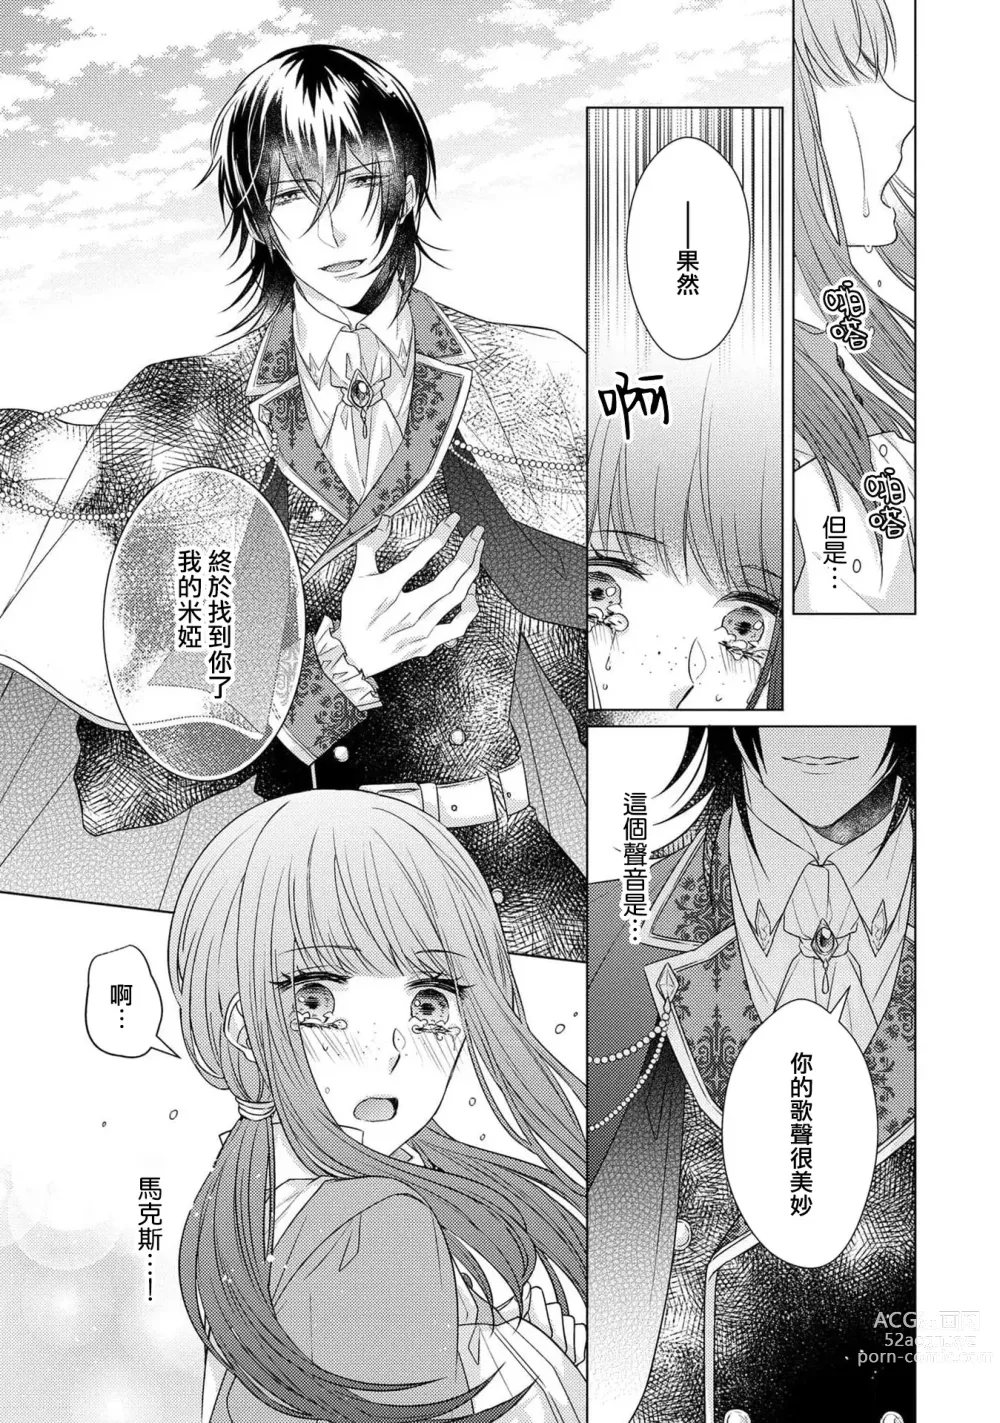 Page 151 of manga 宠爱王子和处女少女~30岁还是处女，这一次和真壁社长签订了炮友契约~ 1-5 end